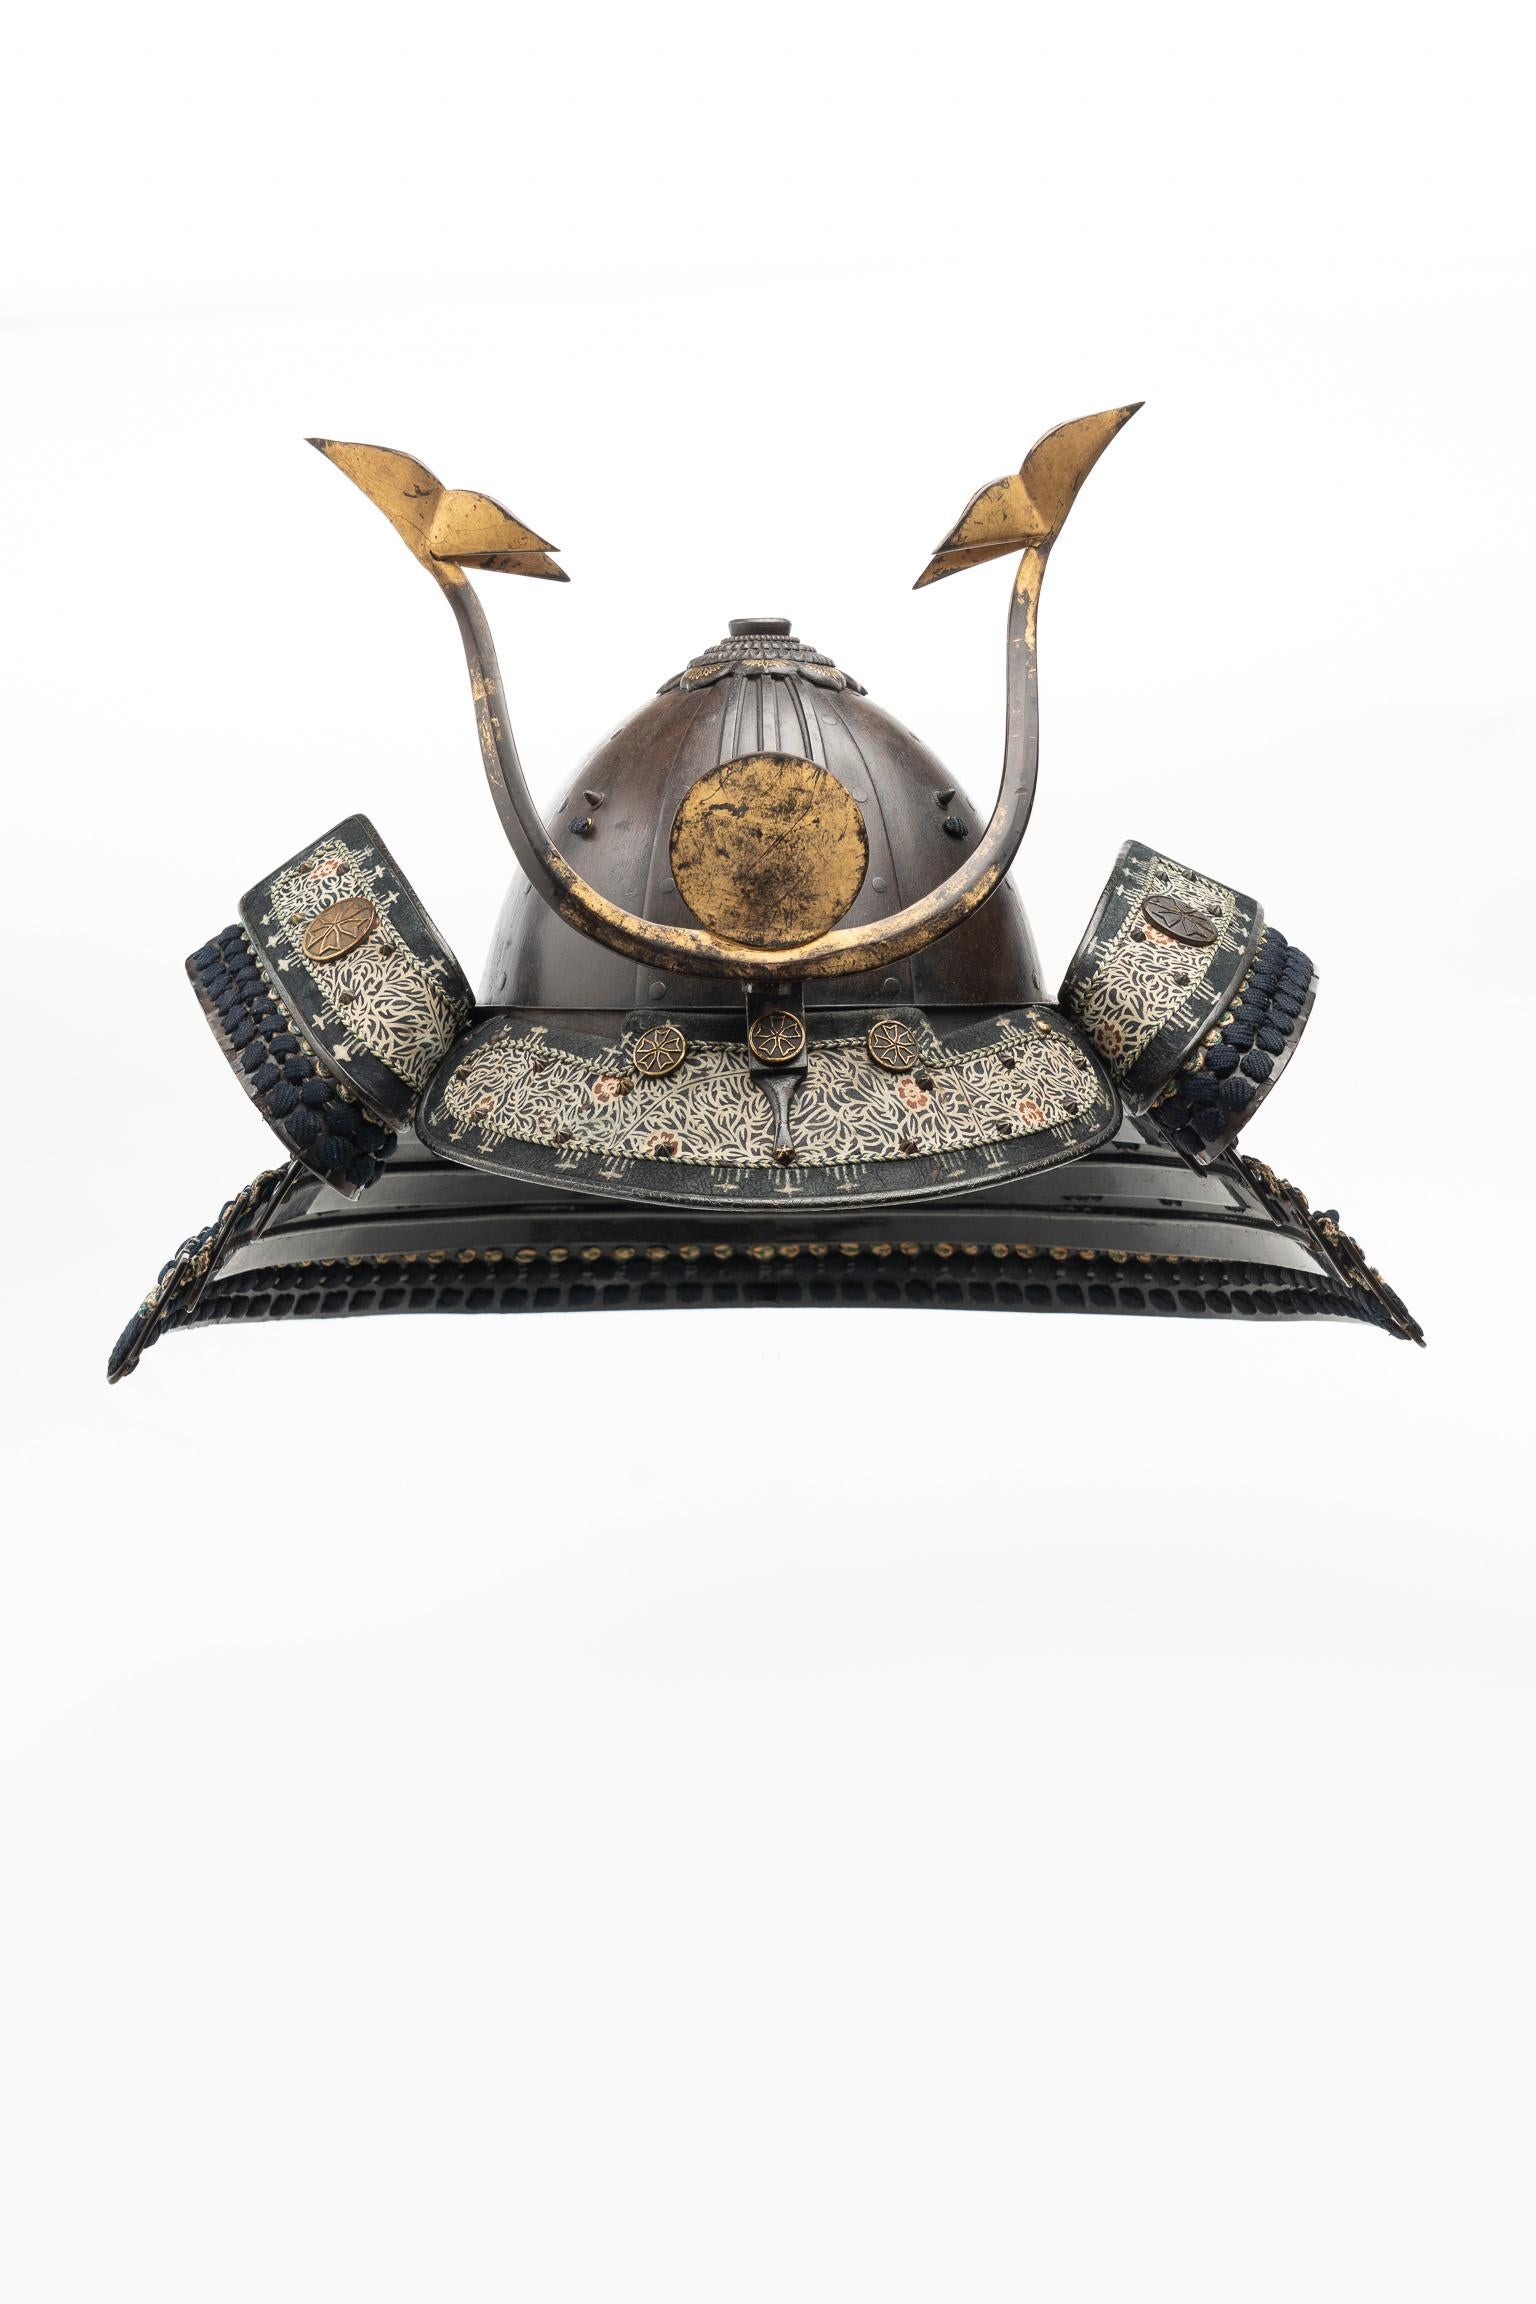 Japanese Toppai kabuto, Signed Haruta Yoshimasa and dated 1802 For Sale